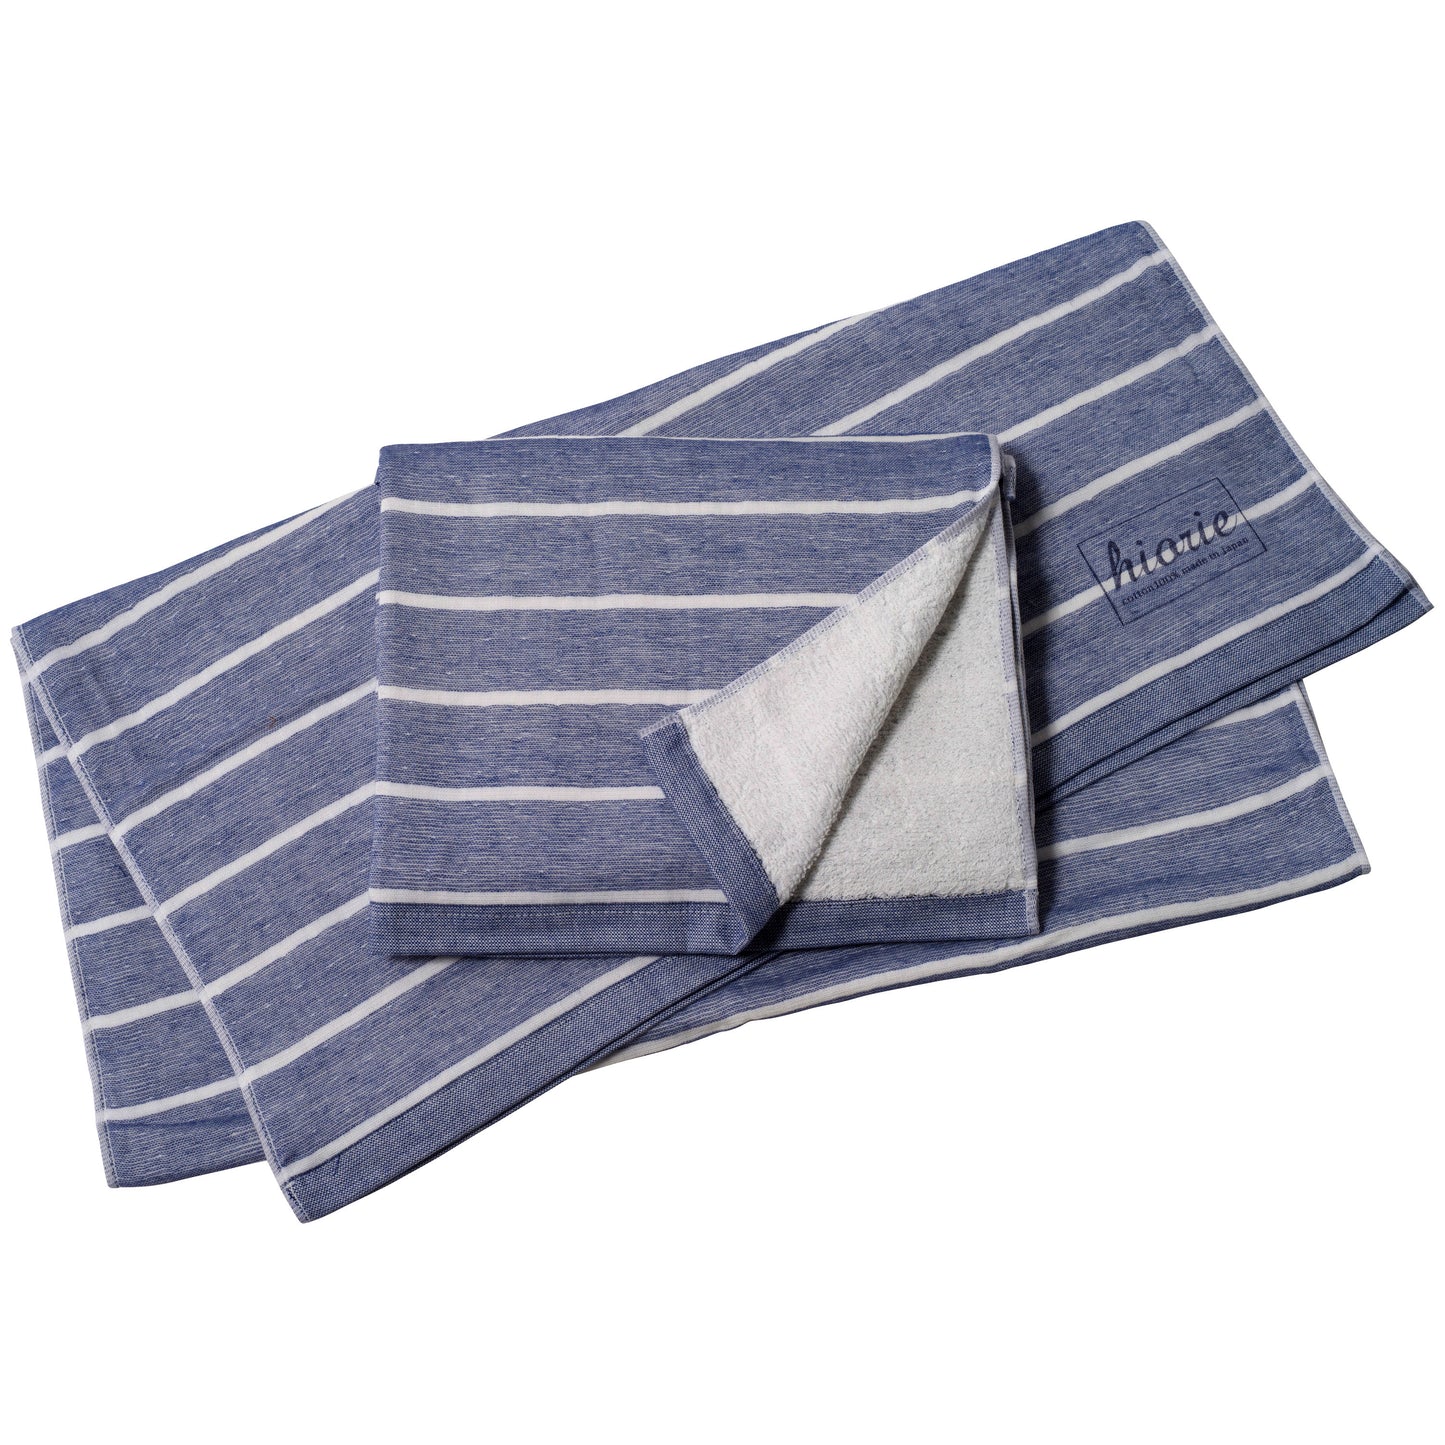 Hiorie Border Gauze Water-Absorption Bath Towel 2 Sheets 100% cotton Japan